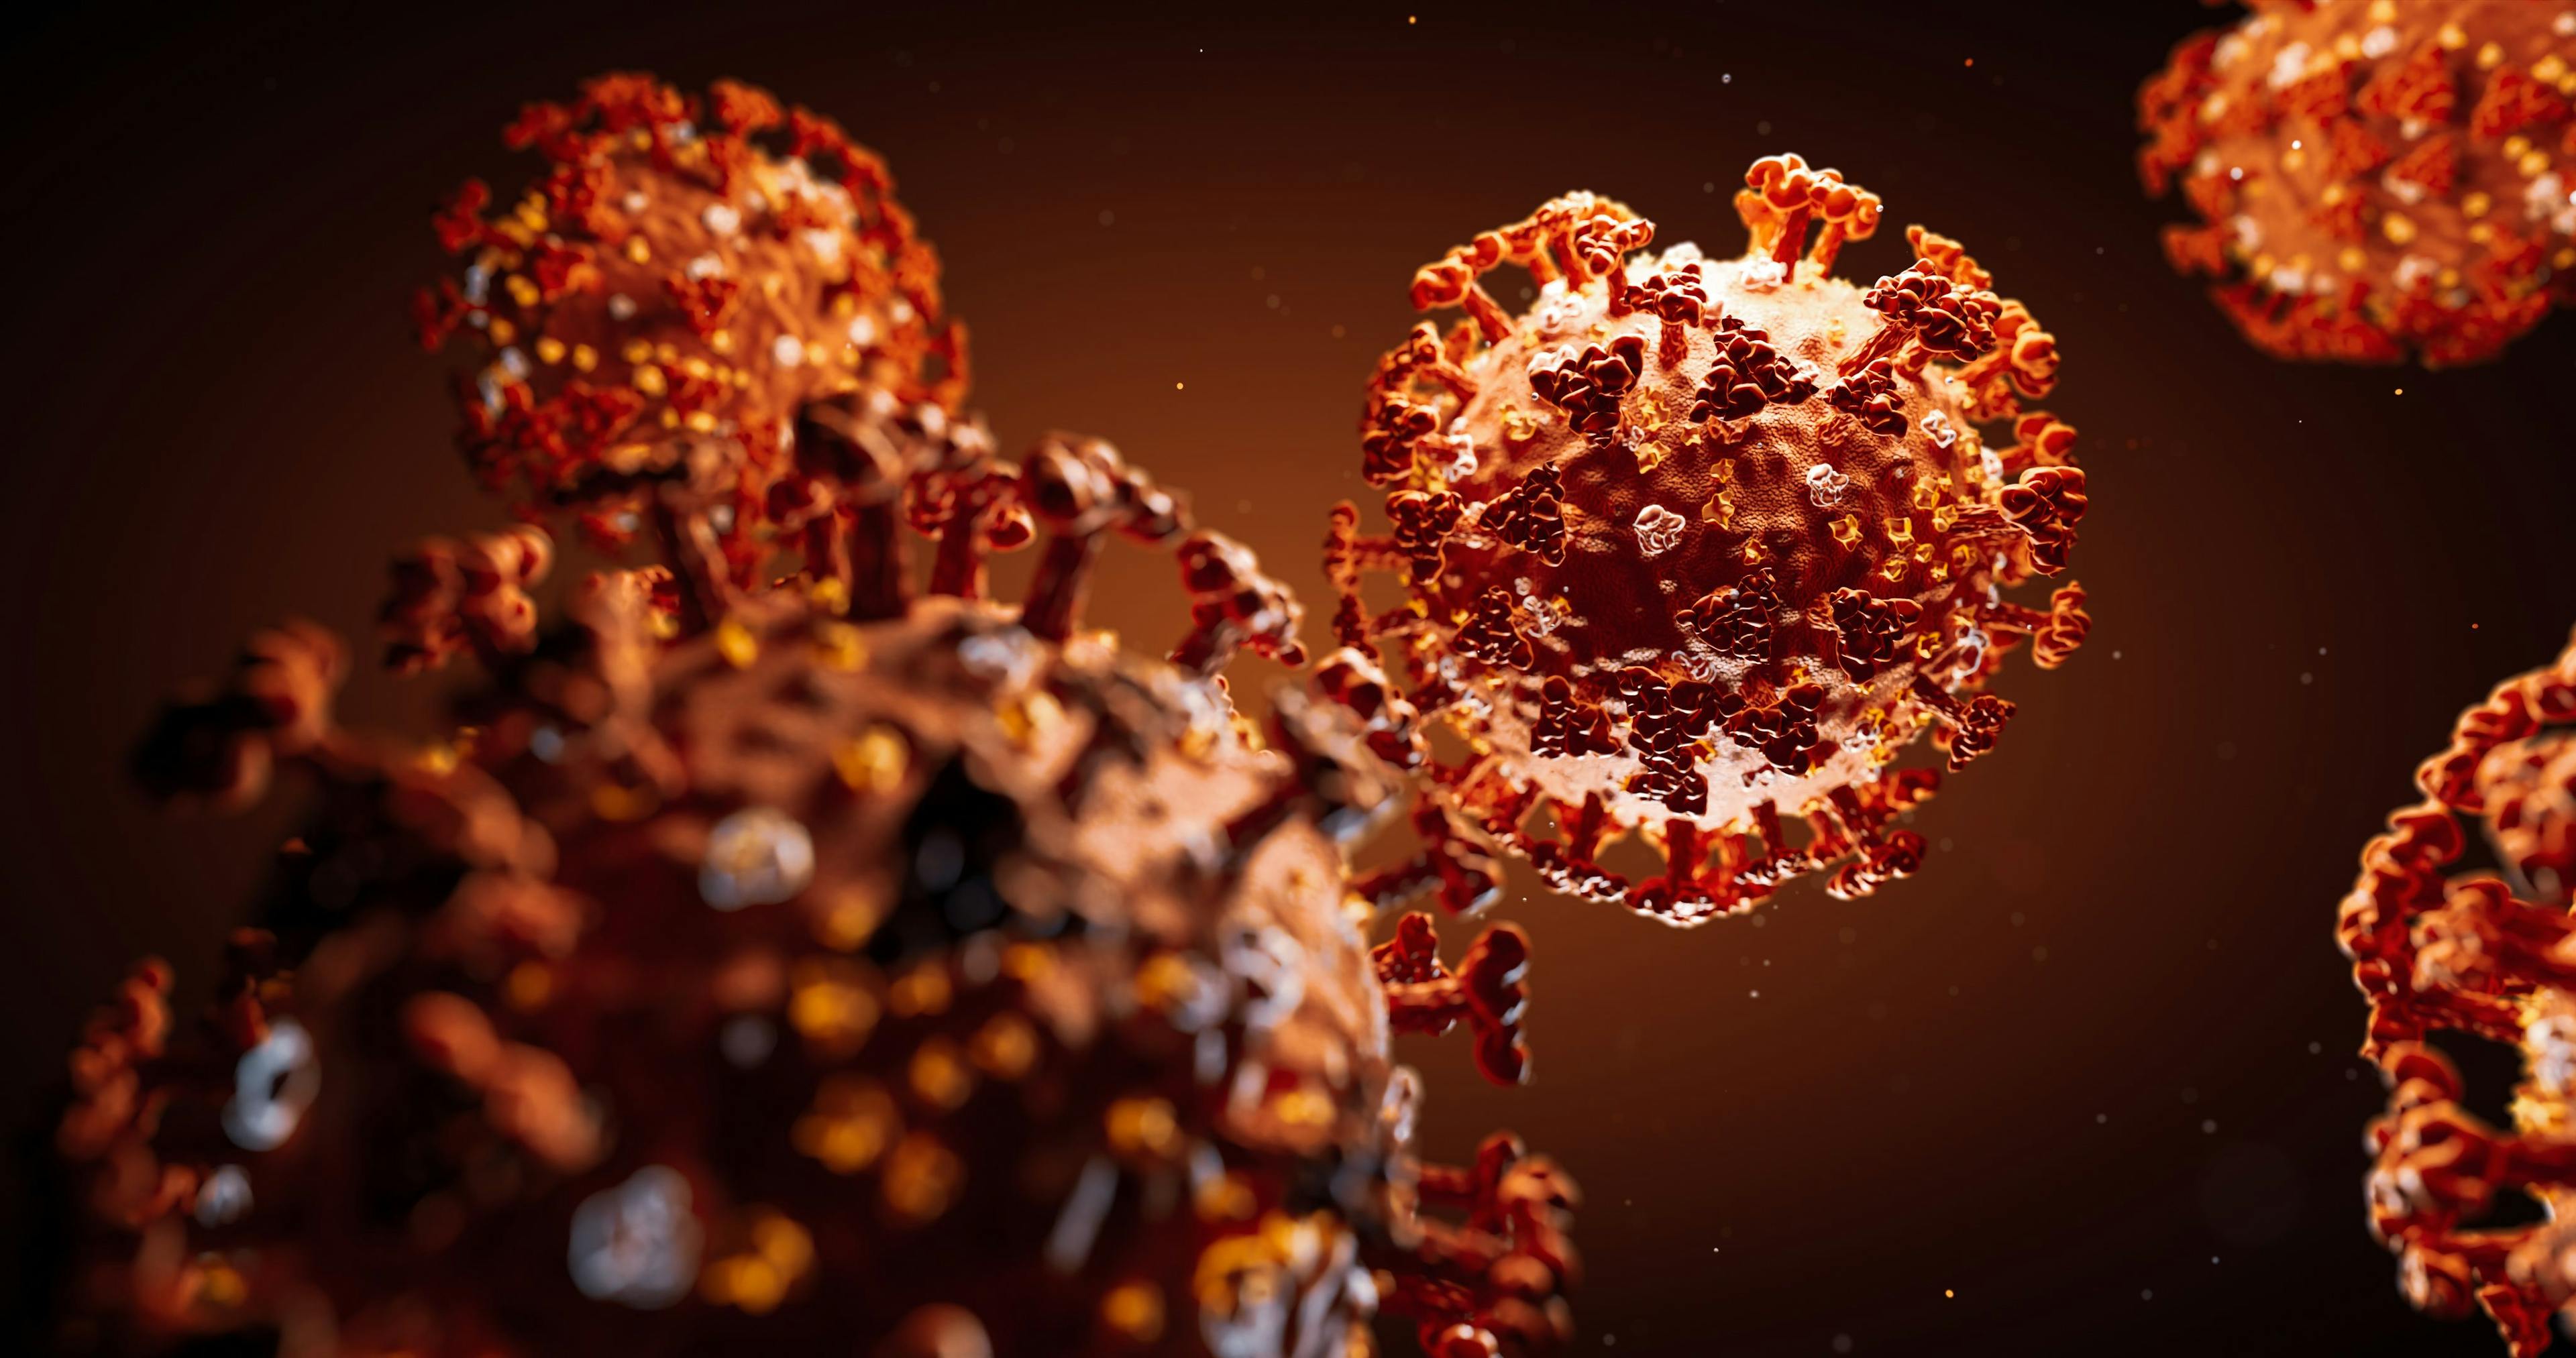 Vaccine in Development for Coronavirus Disease 2019